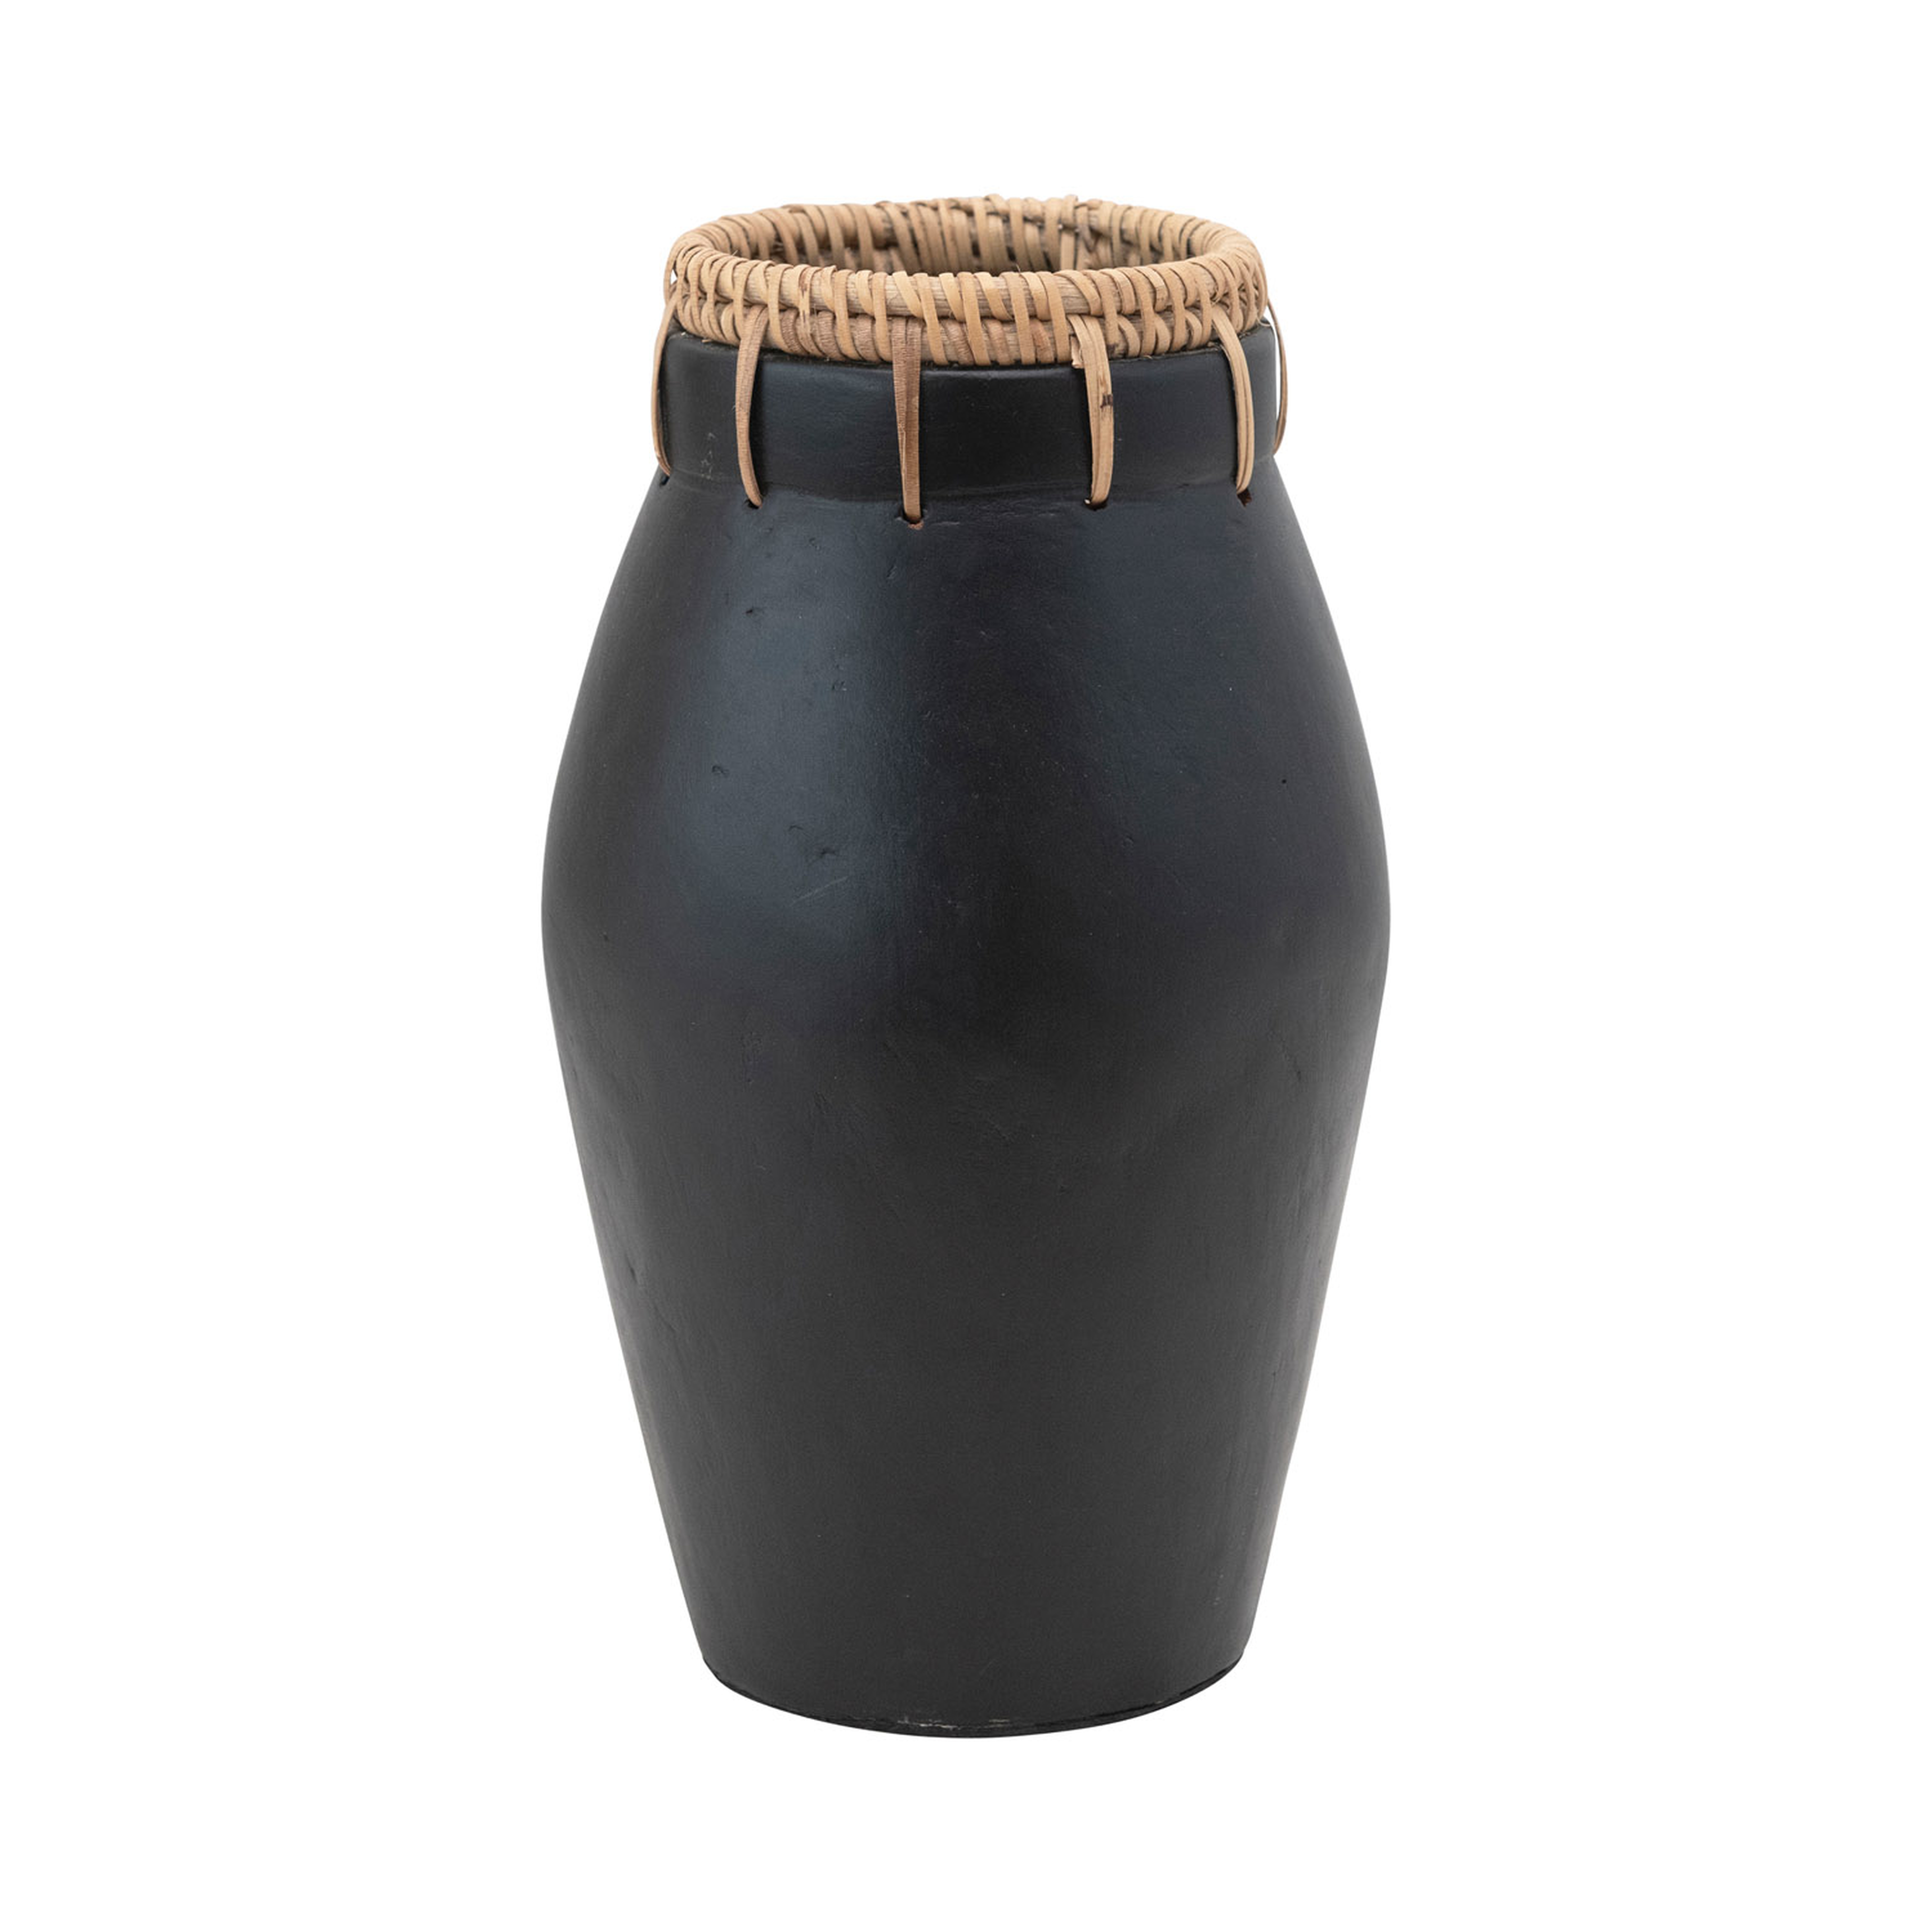 Handmade Terra-cotta Vase with Rattan Stitching - Nomad Home